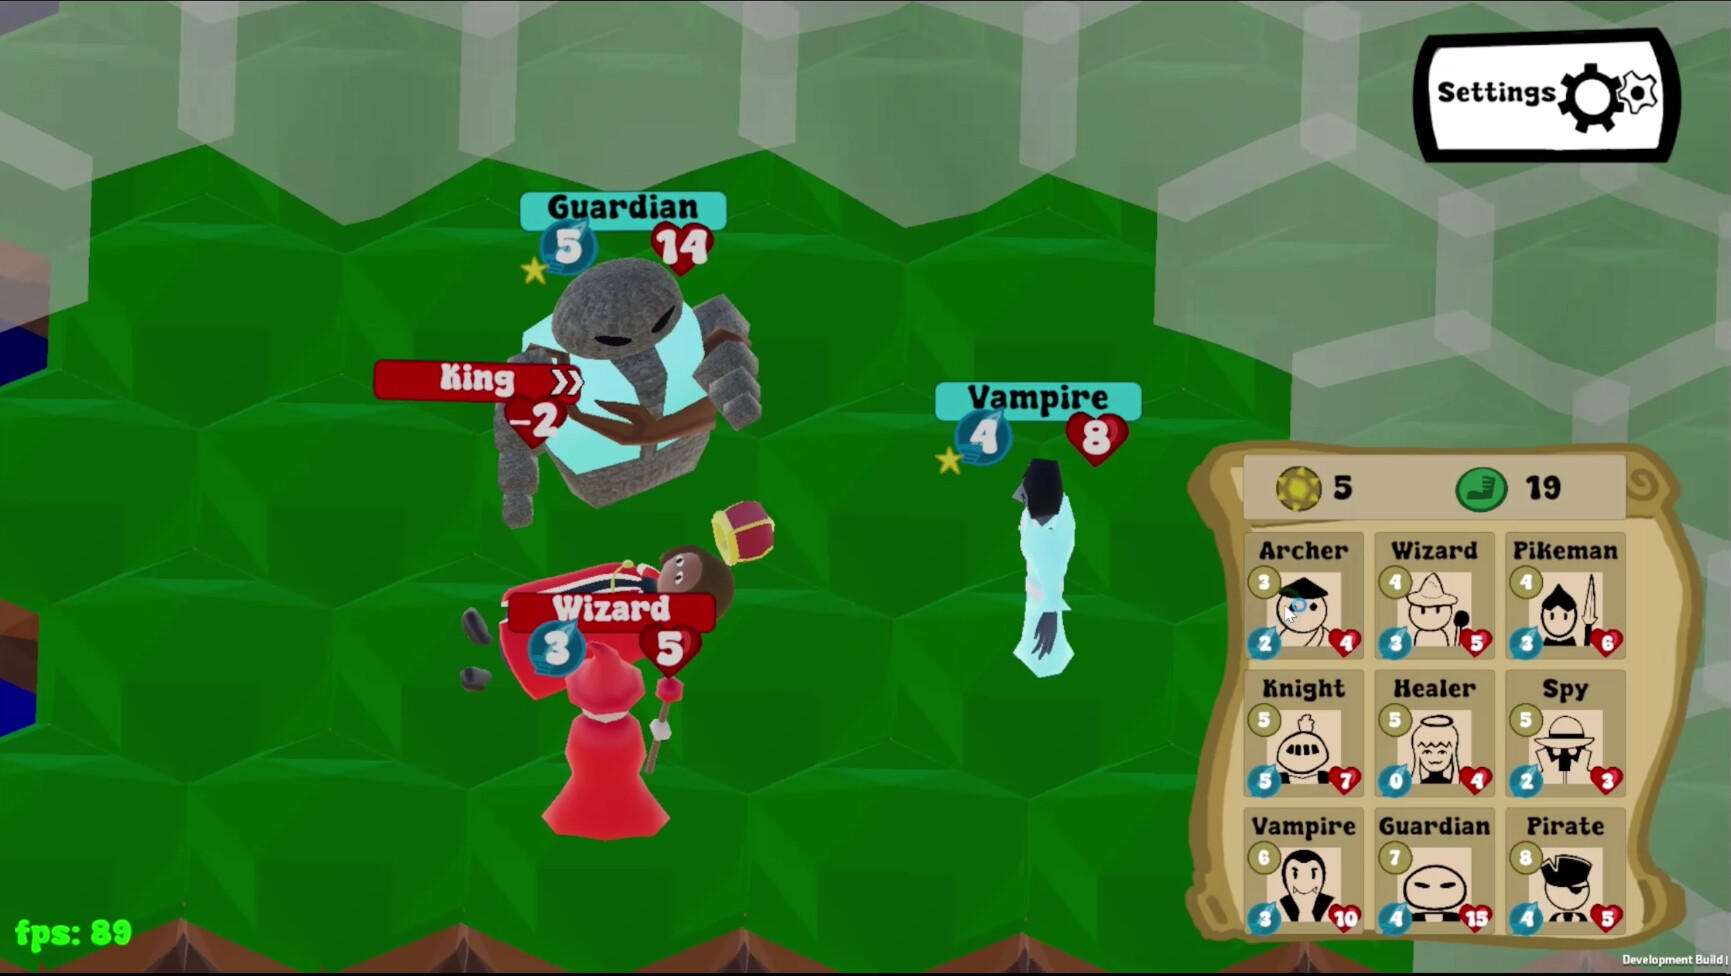 Hexagoner screenshot game